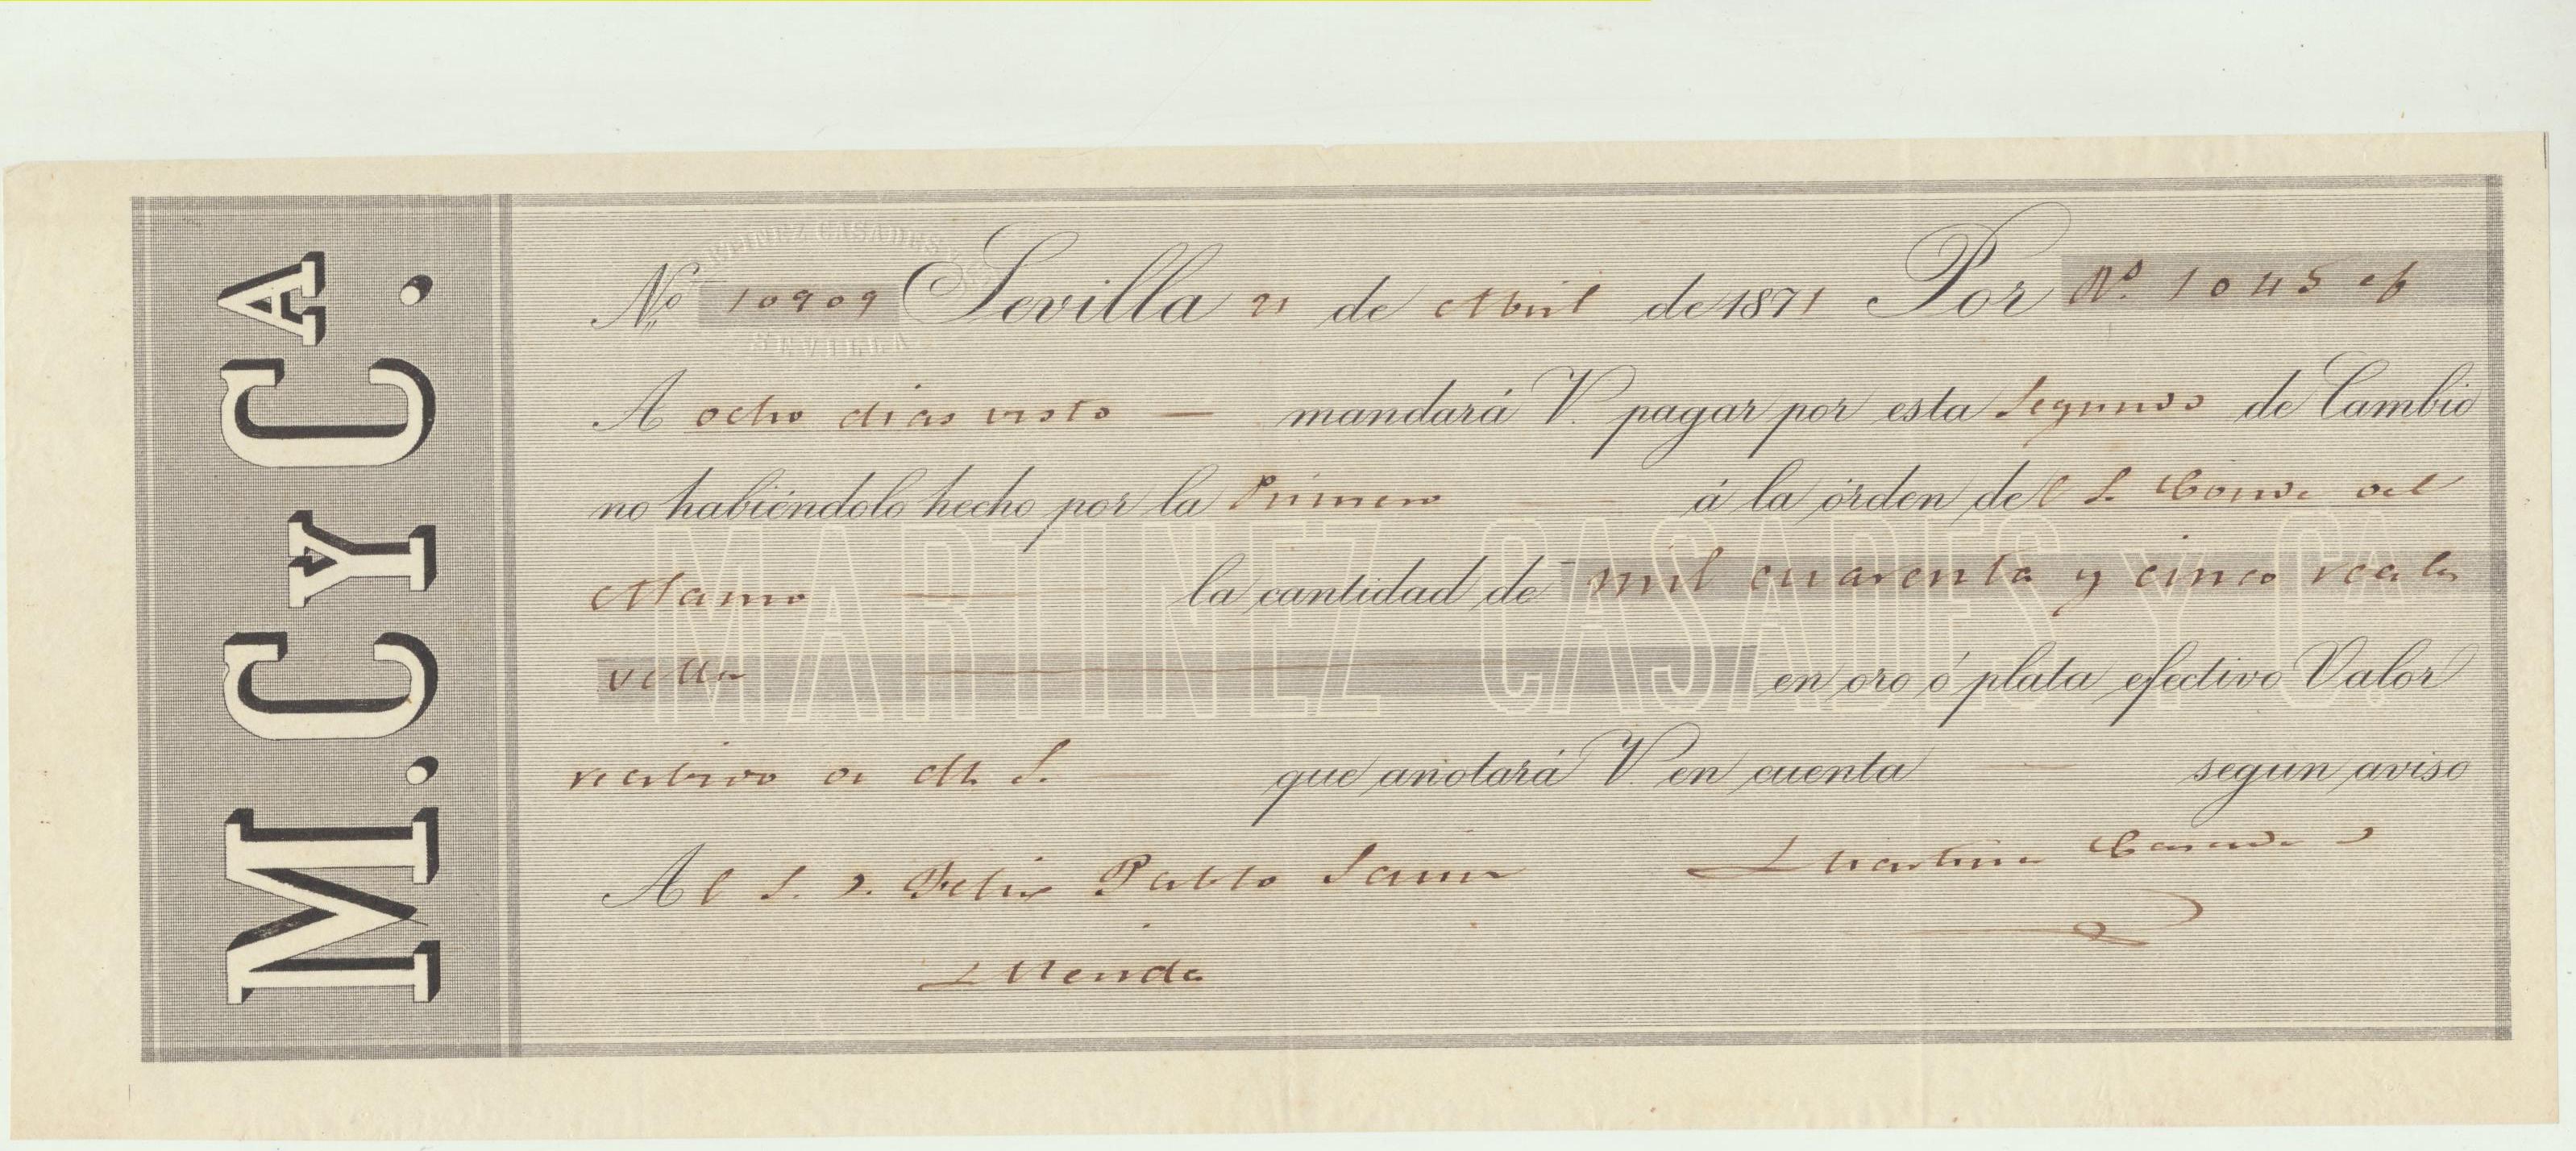 Letra de Cambio con Membrete por 1045 Reales de vellón. Sevilla 21 de abril de 1871. Pagadera en Mérida